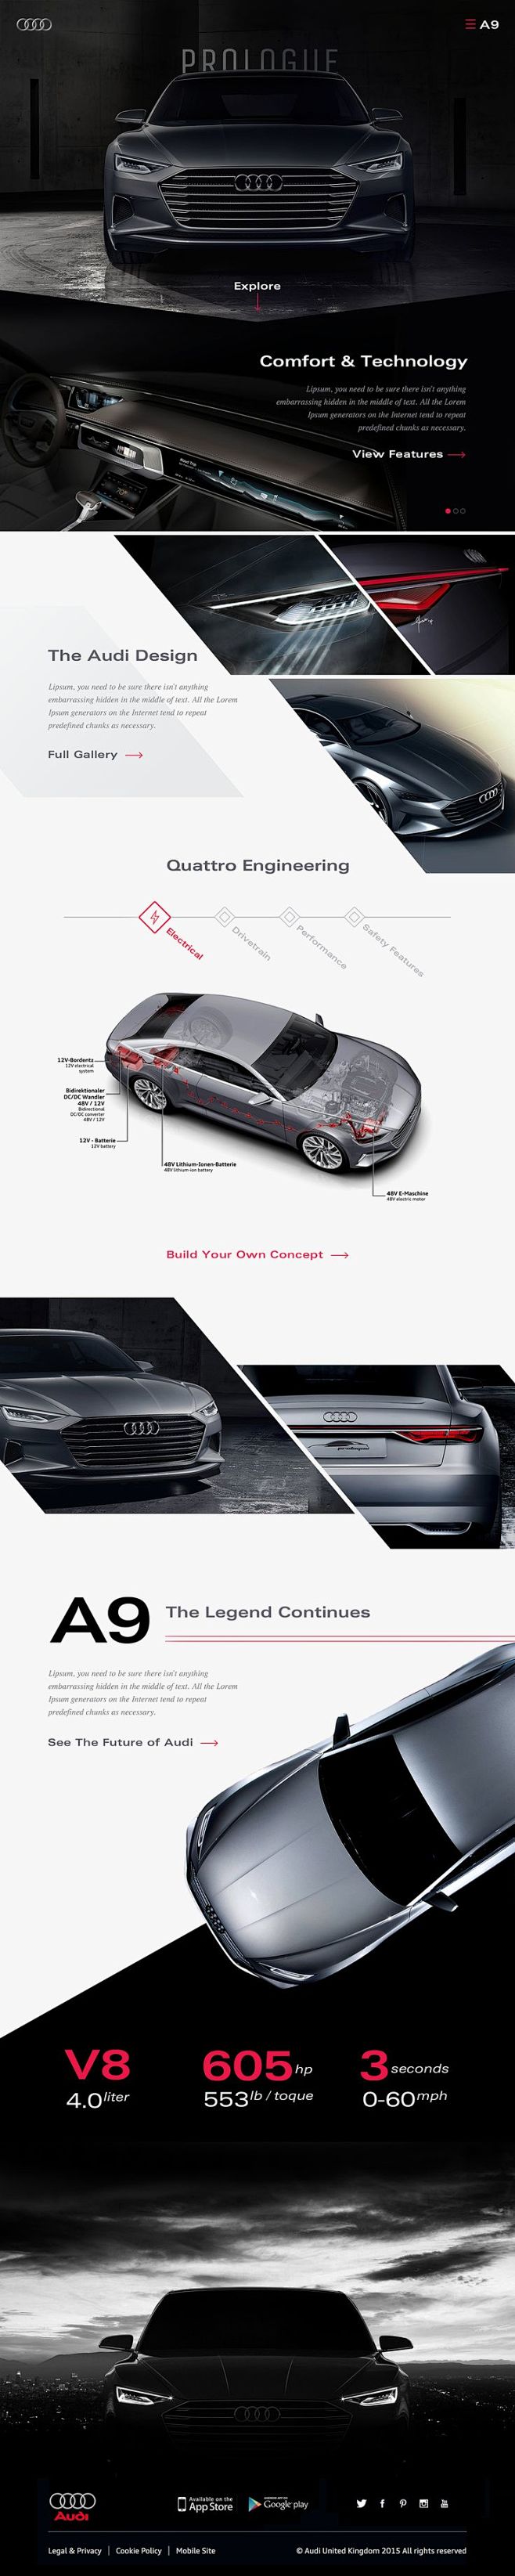 Audi prologue 1400